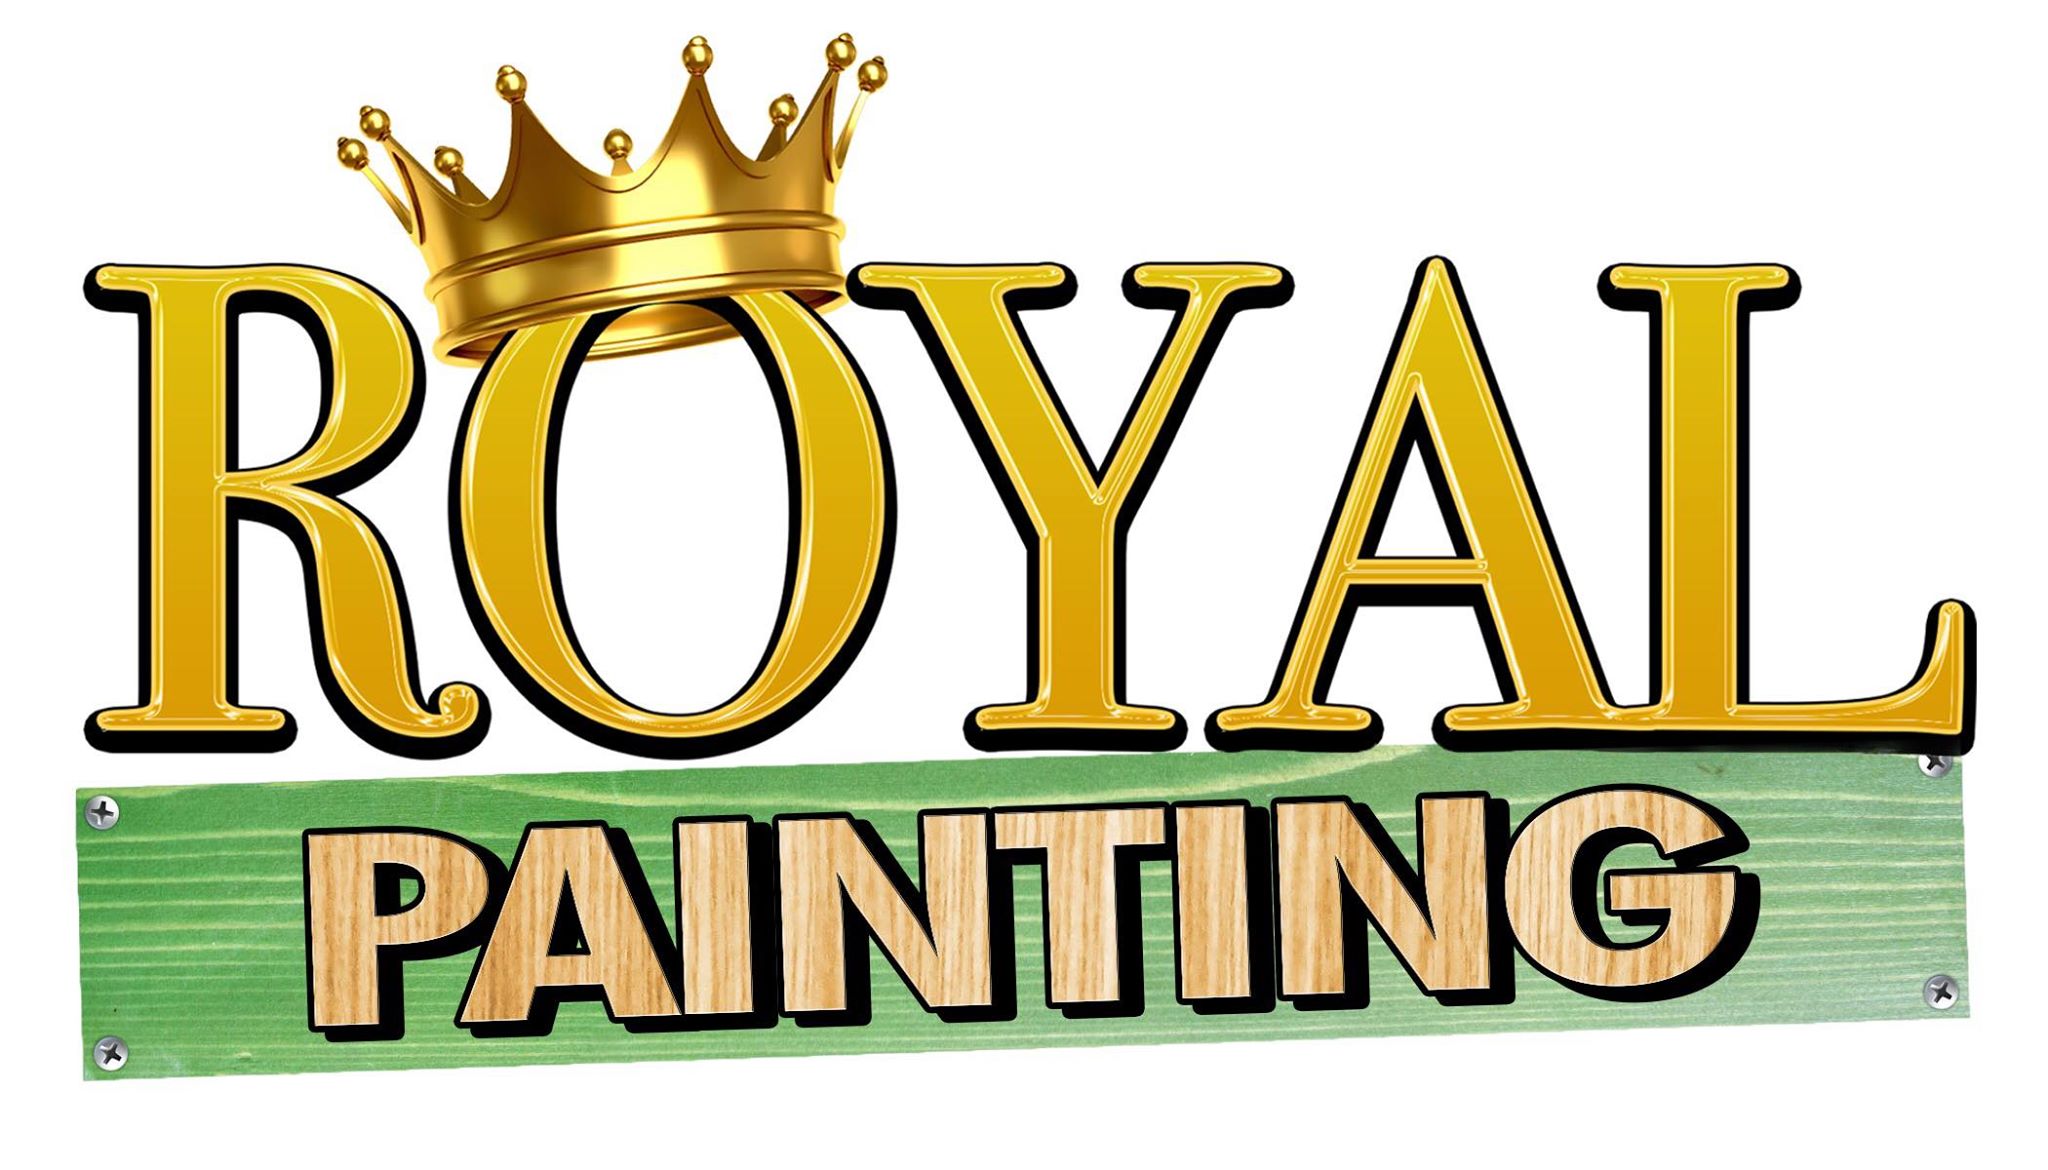 Royal Woodworks, LLC